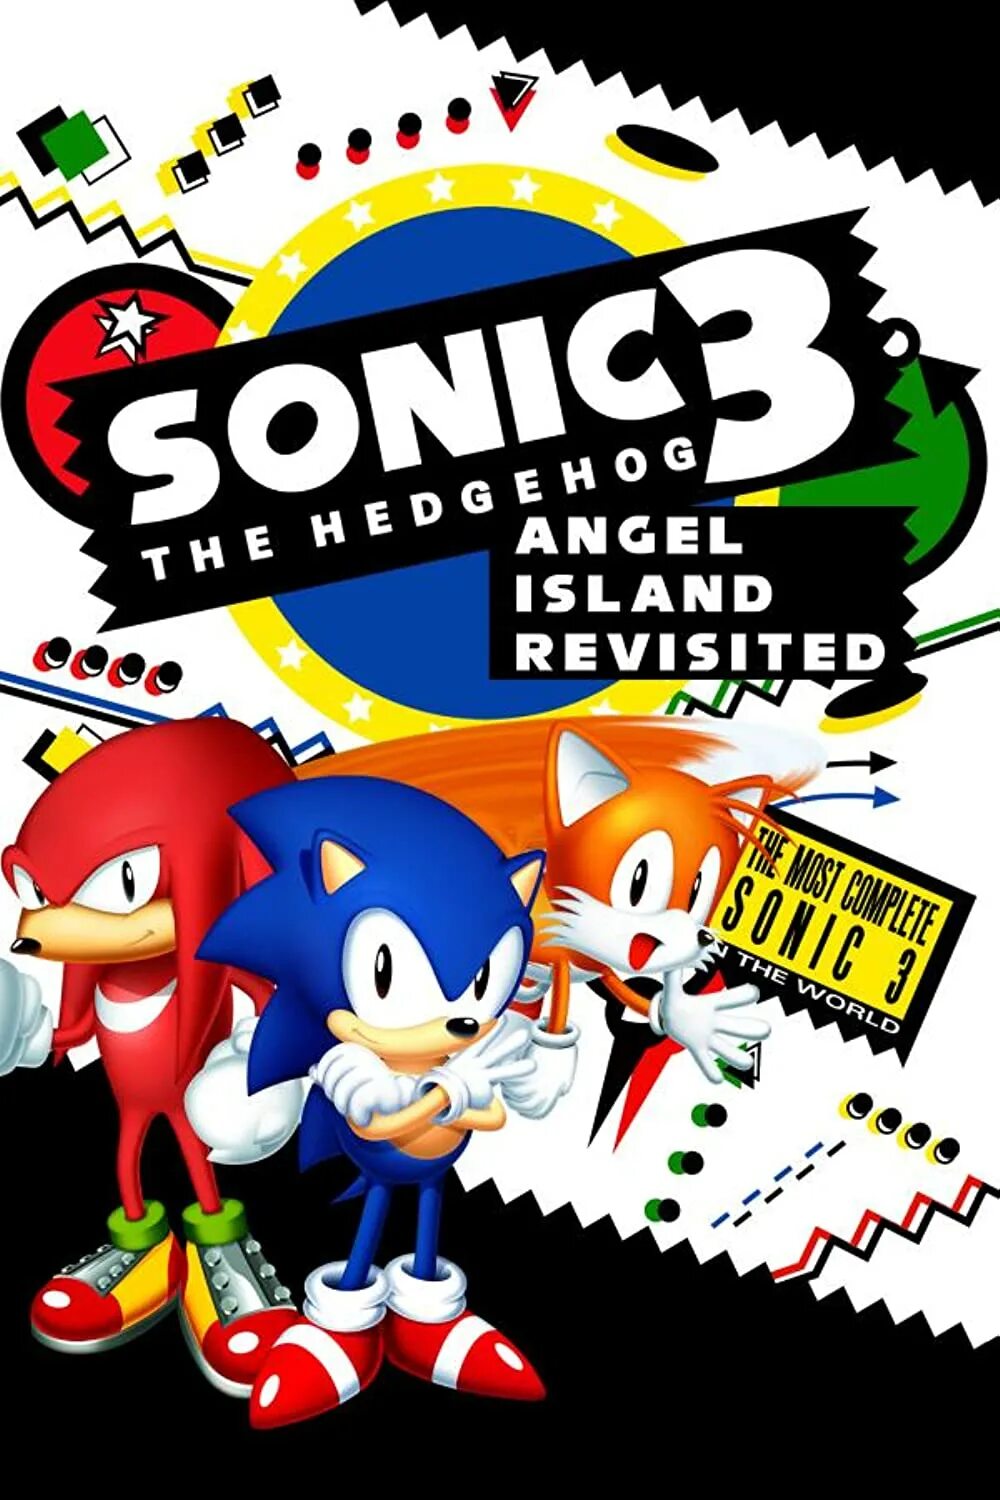 Игра Sonic the Hedgehog 3. Sonic 3 Air. Sonic 3 Air logo. Angel Island! (Sonic 3 and Knuckles). Sonic 3 mobile